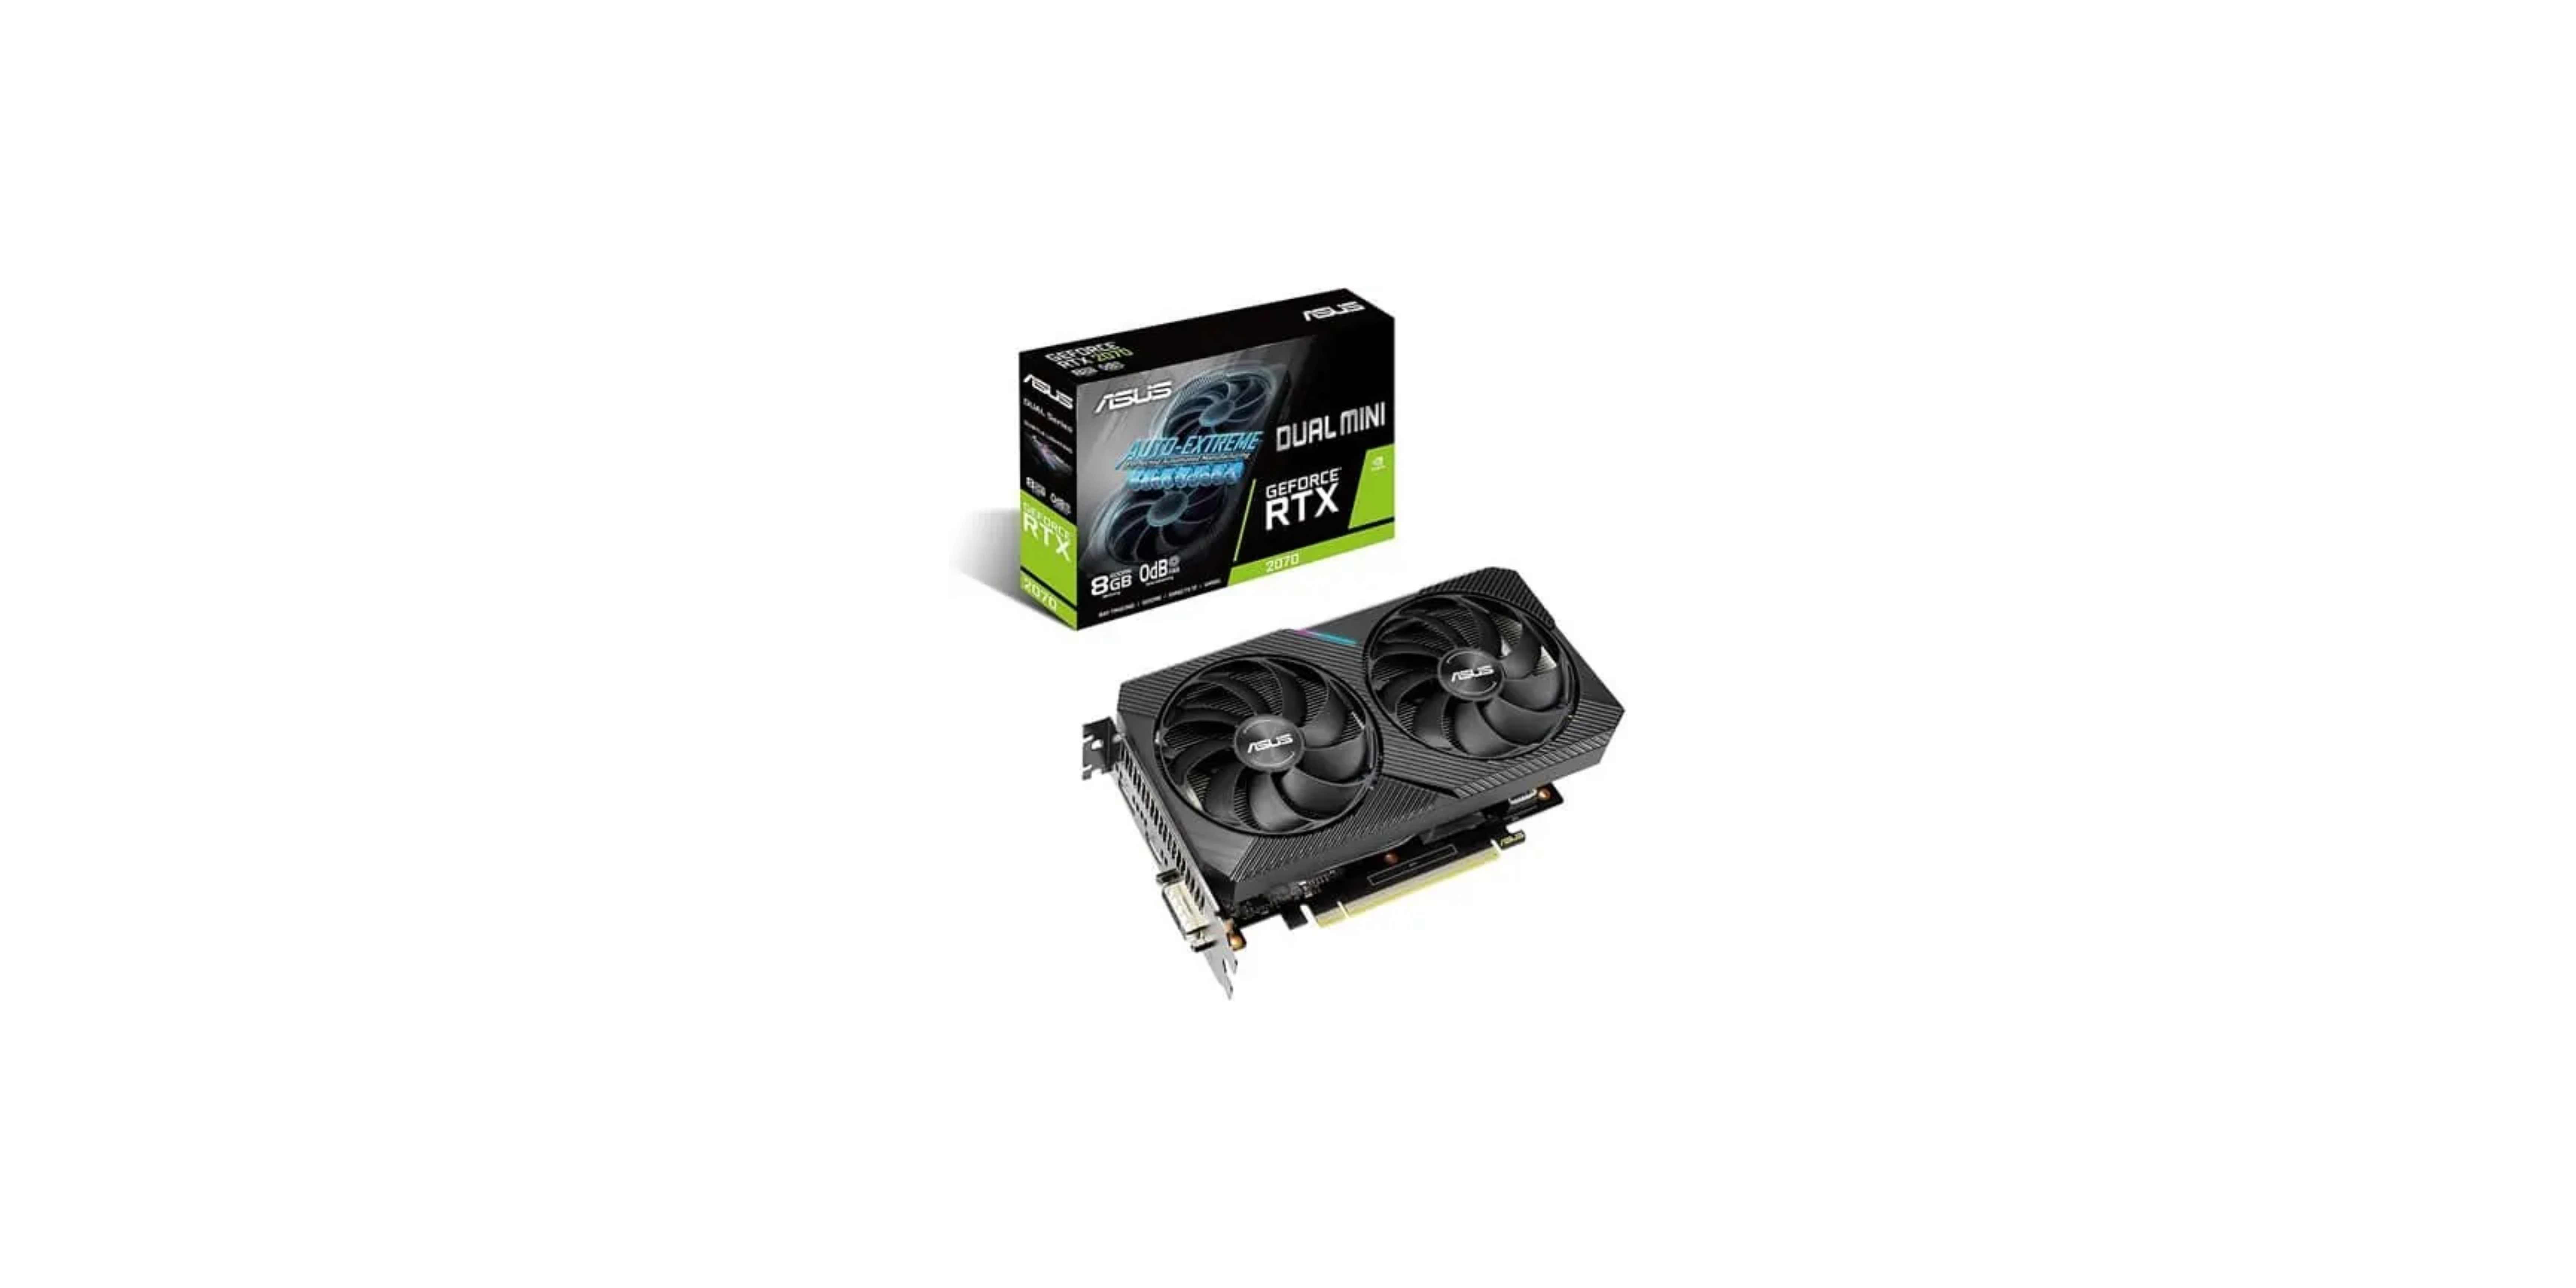 NVIDIA GeForce RTX 2070, dual fan gpu with box